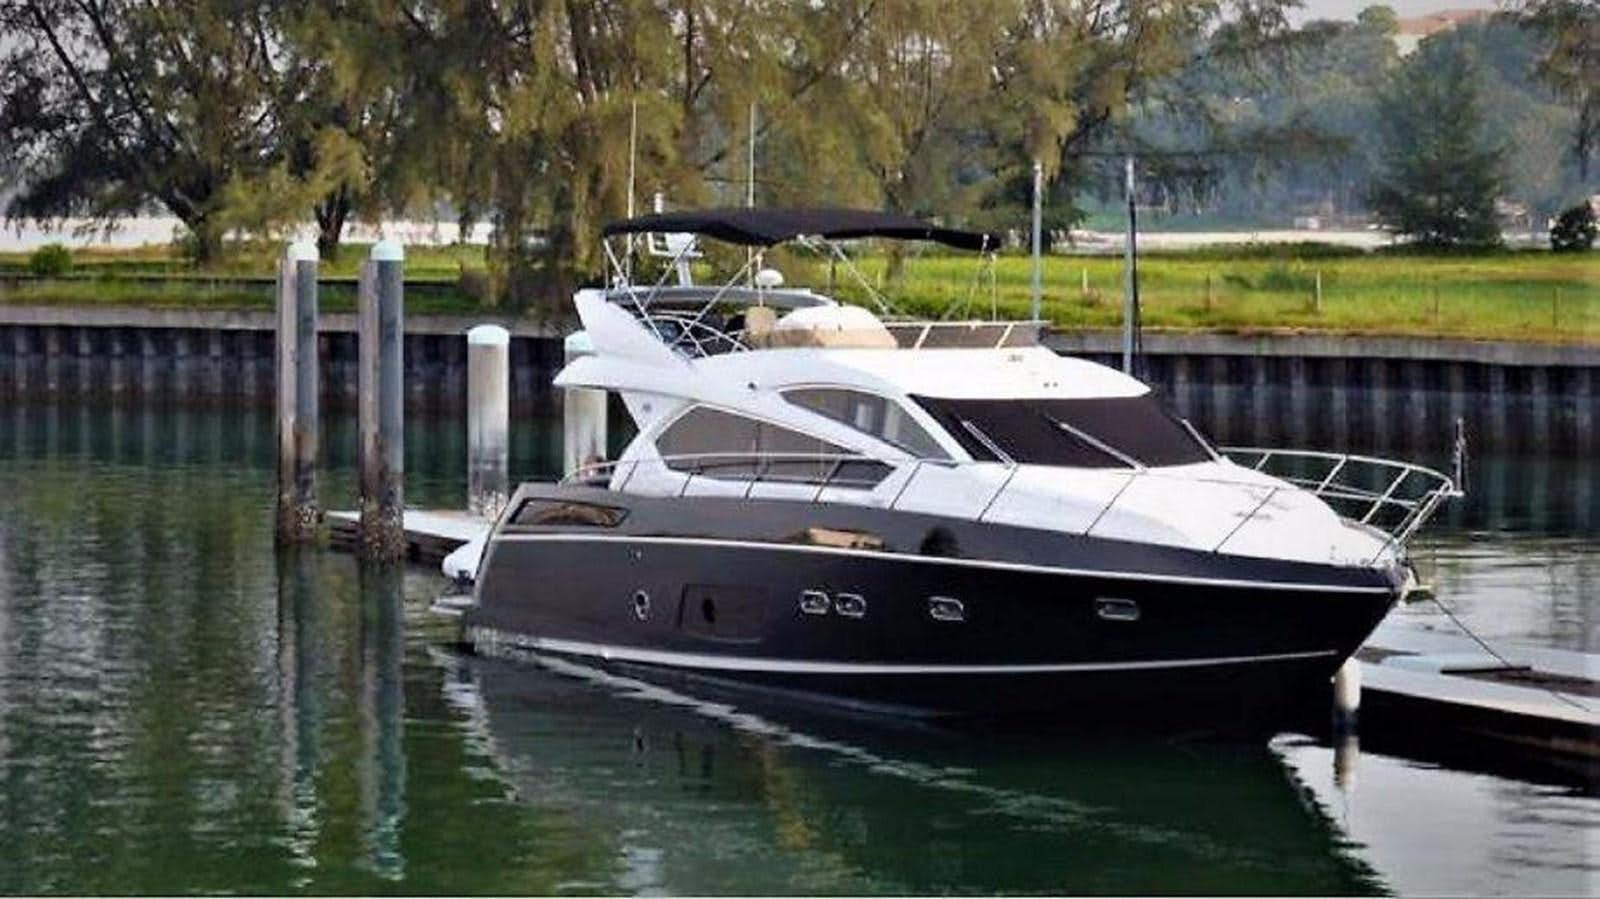 2012 sunseeker manhattan 63
Yacht for Sale